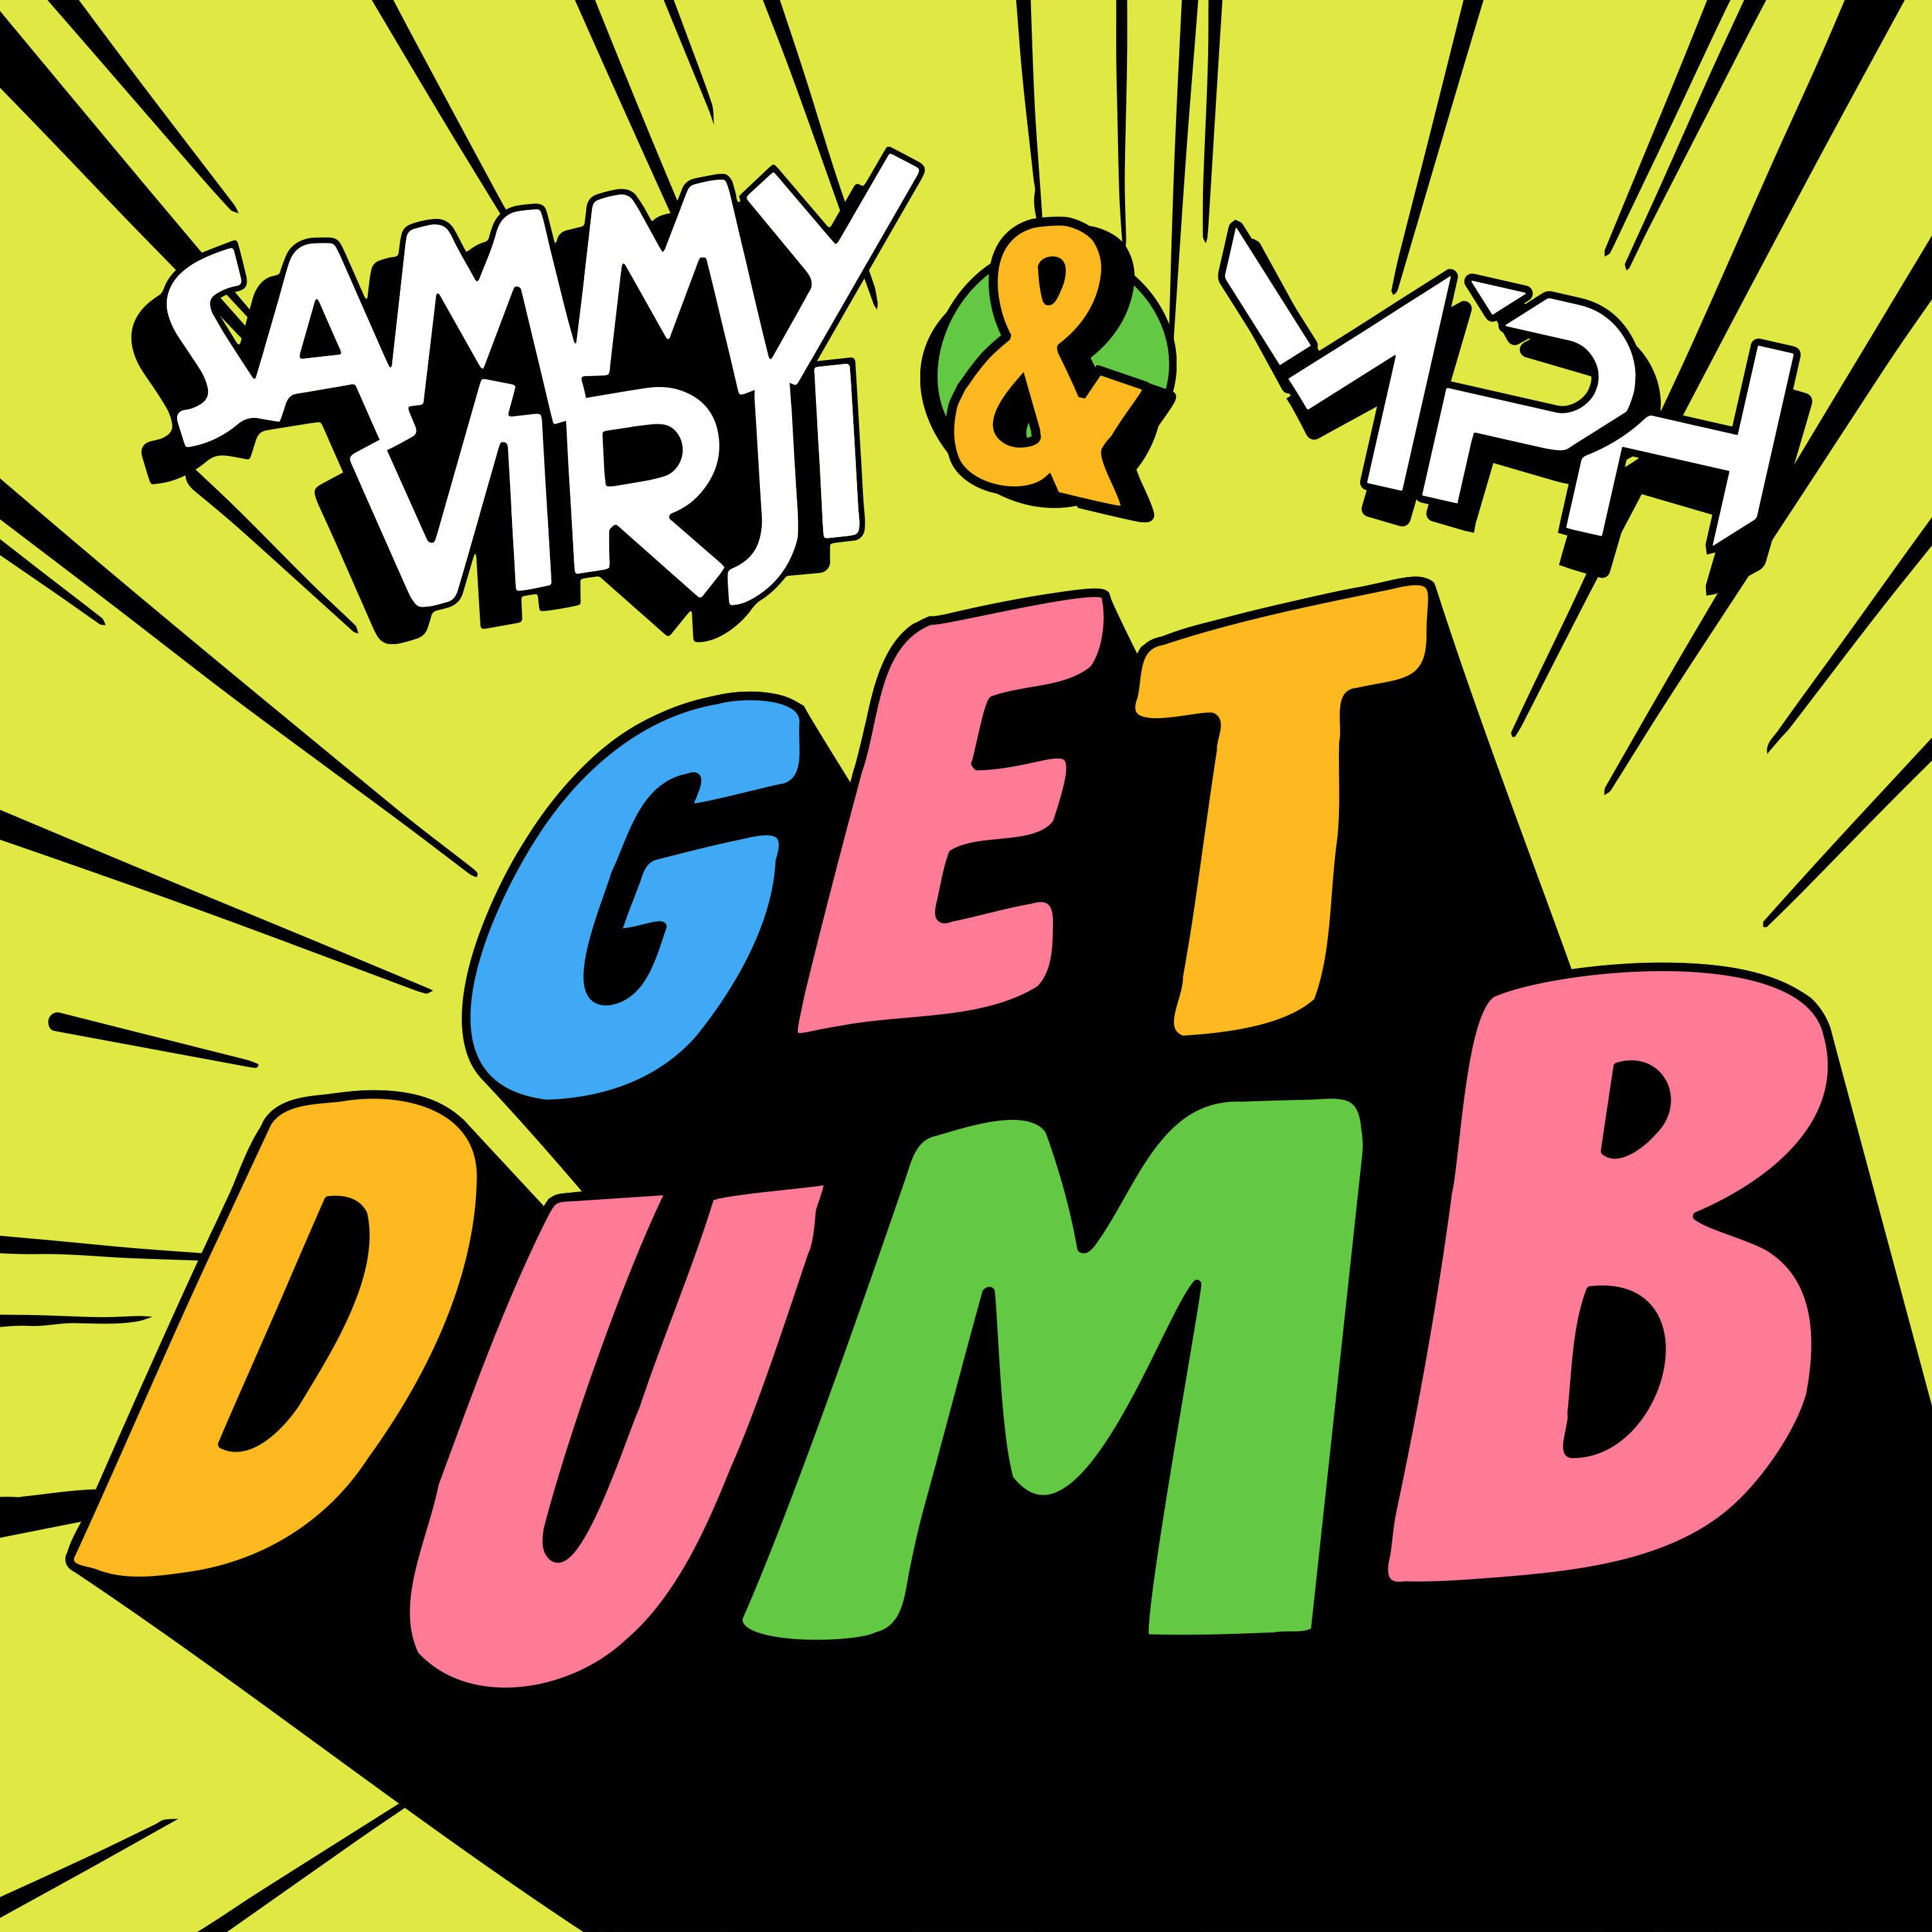 Get Dumb歌词 歌手Sammy Virji / MPH-专辑Get Dumb-单曲《Get Dumb》LRC歌词下载